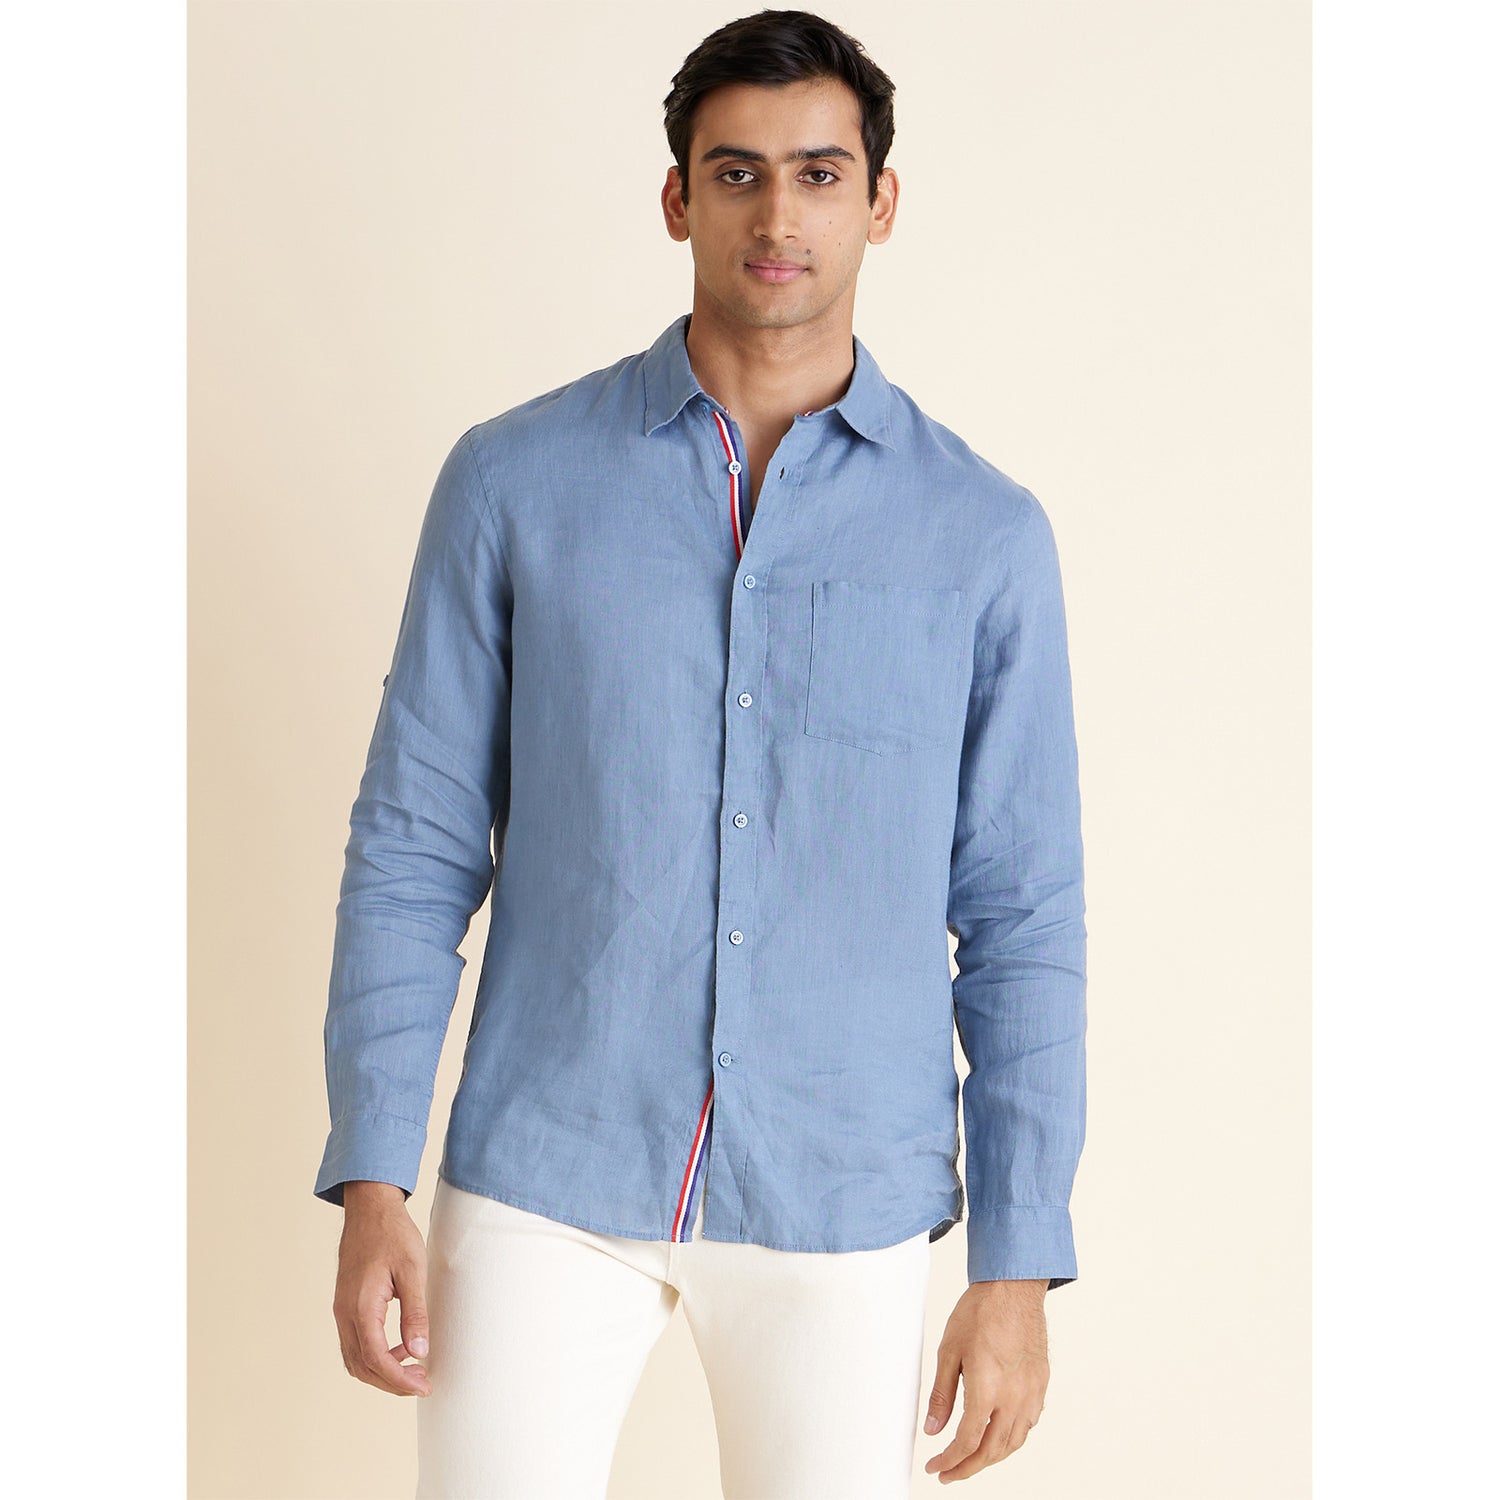 Blue Spread Collar Linen Casual Shirt (DATALIN1)